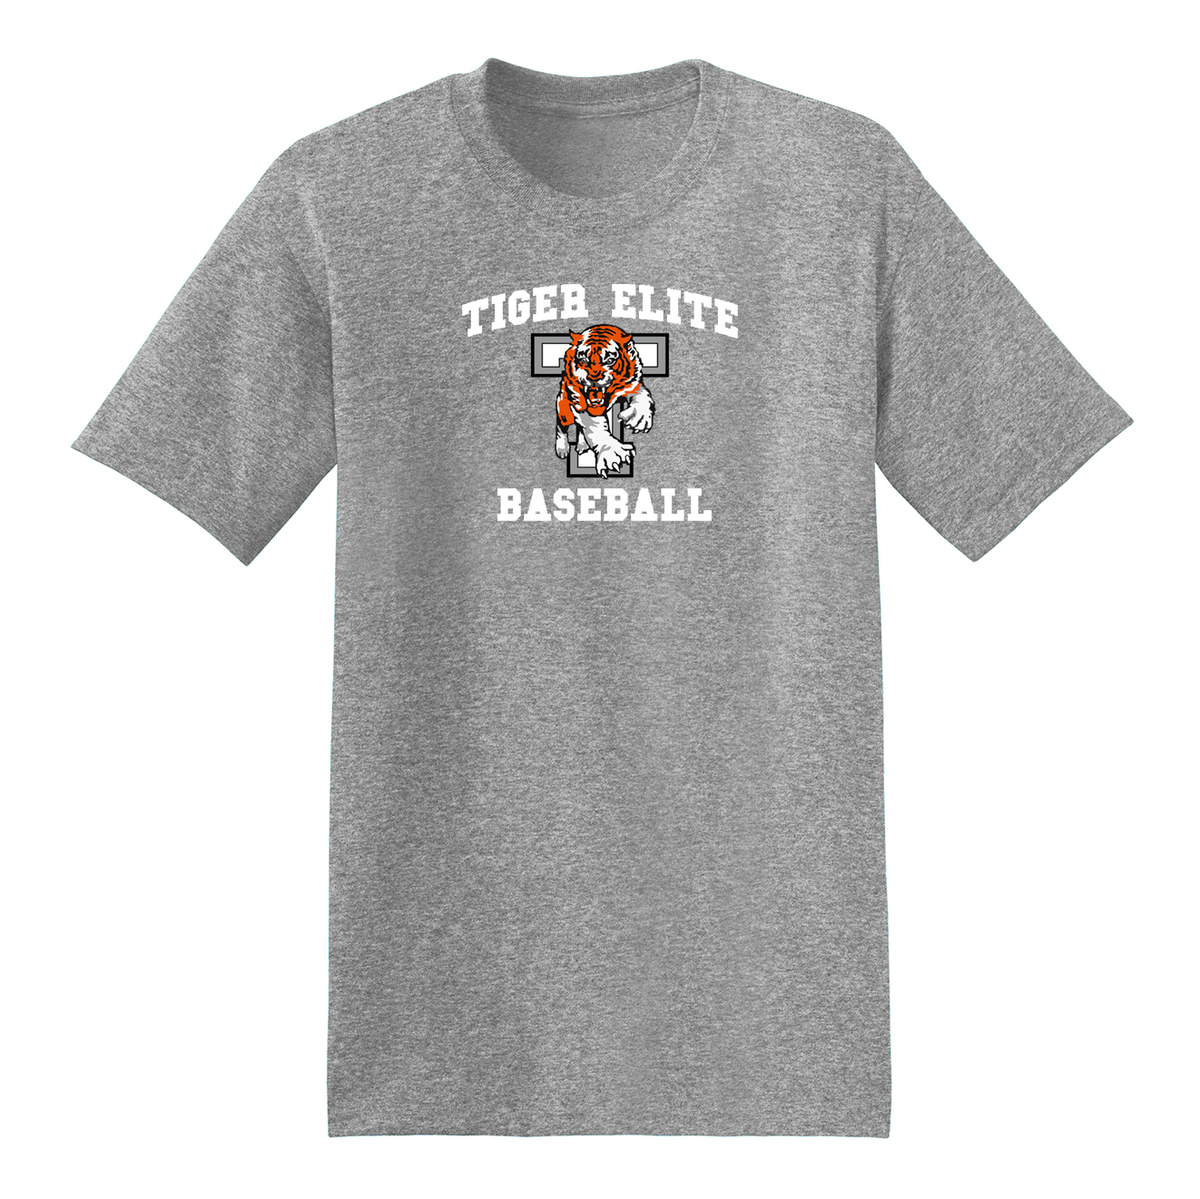 Tiger Elite Baseball T-Shirt